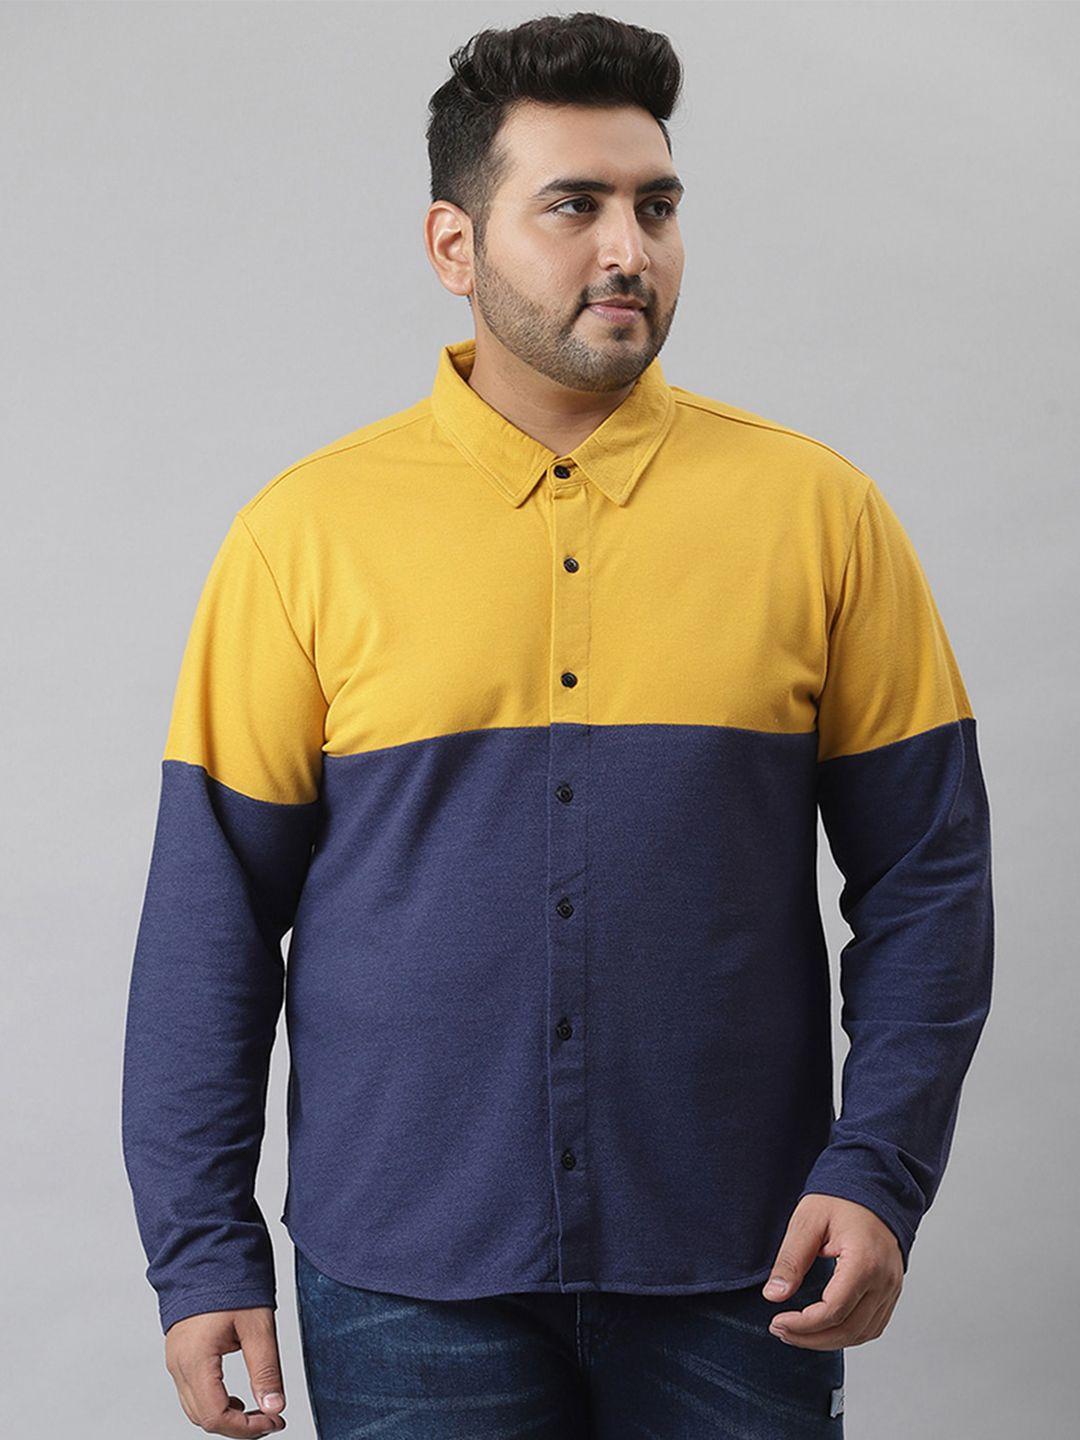 instafab plus men plus size classic colourblocked cotton casual shirt